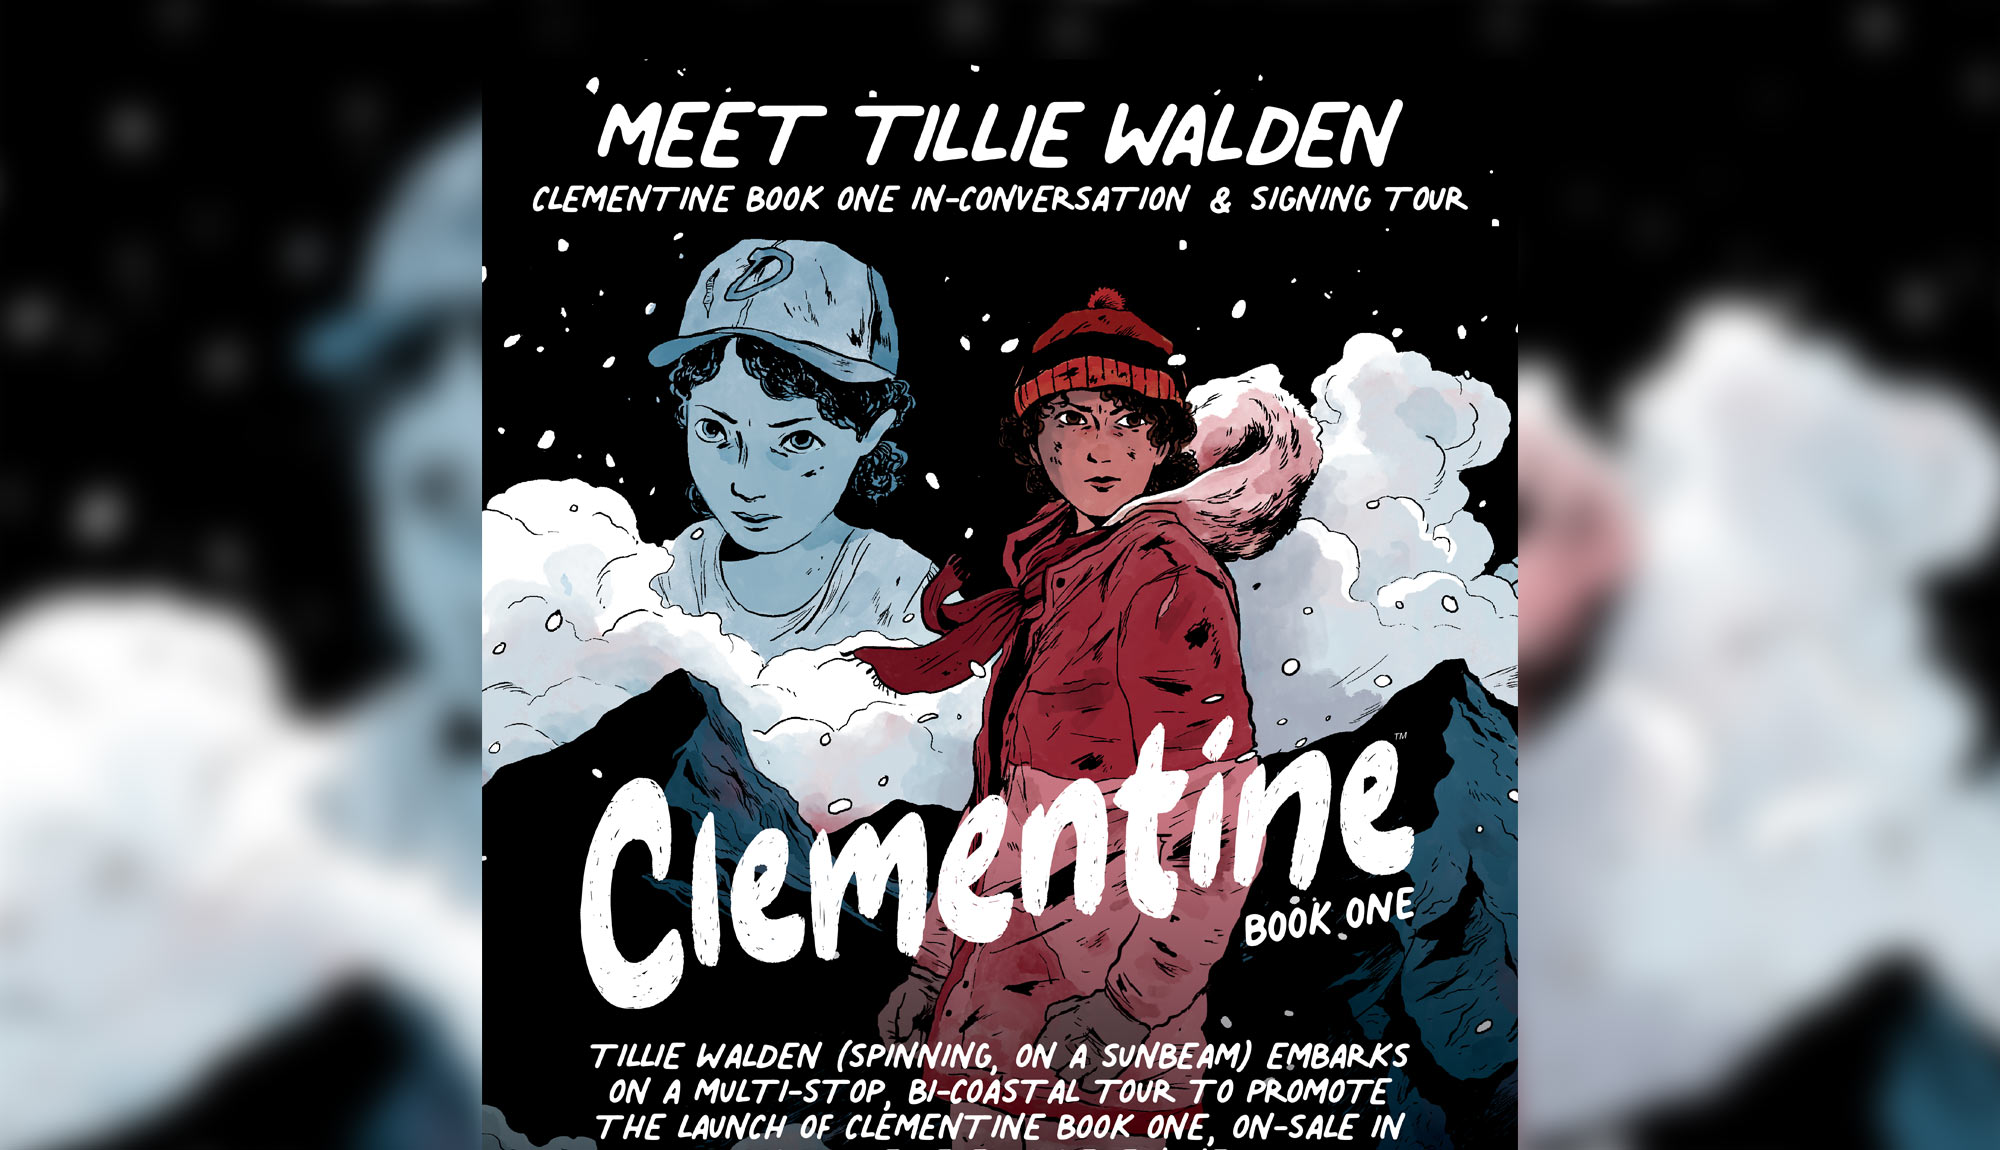 Tillie Walden Summer Book Tour for CLEMENTINE